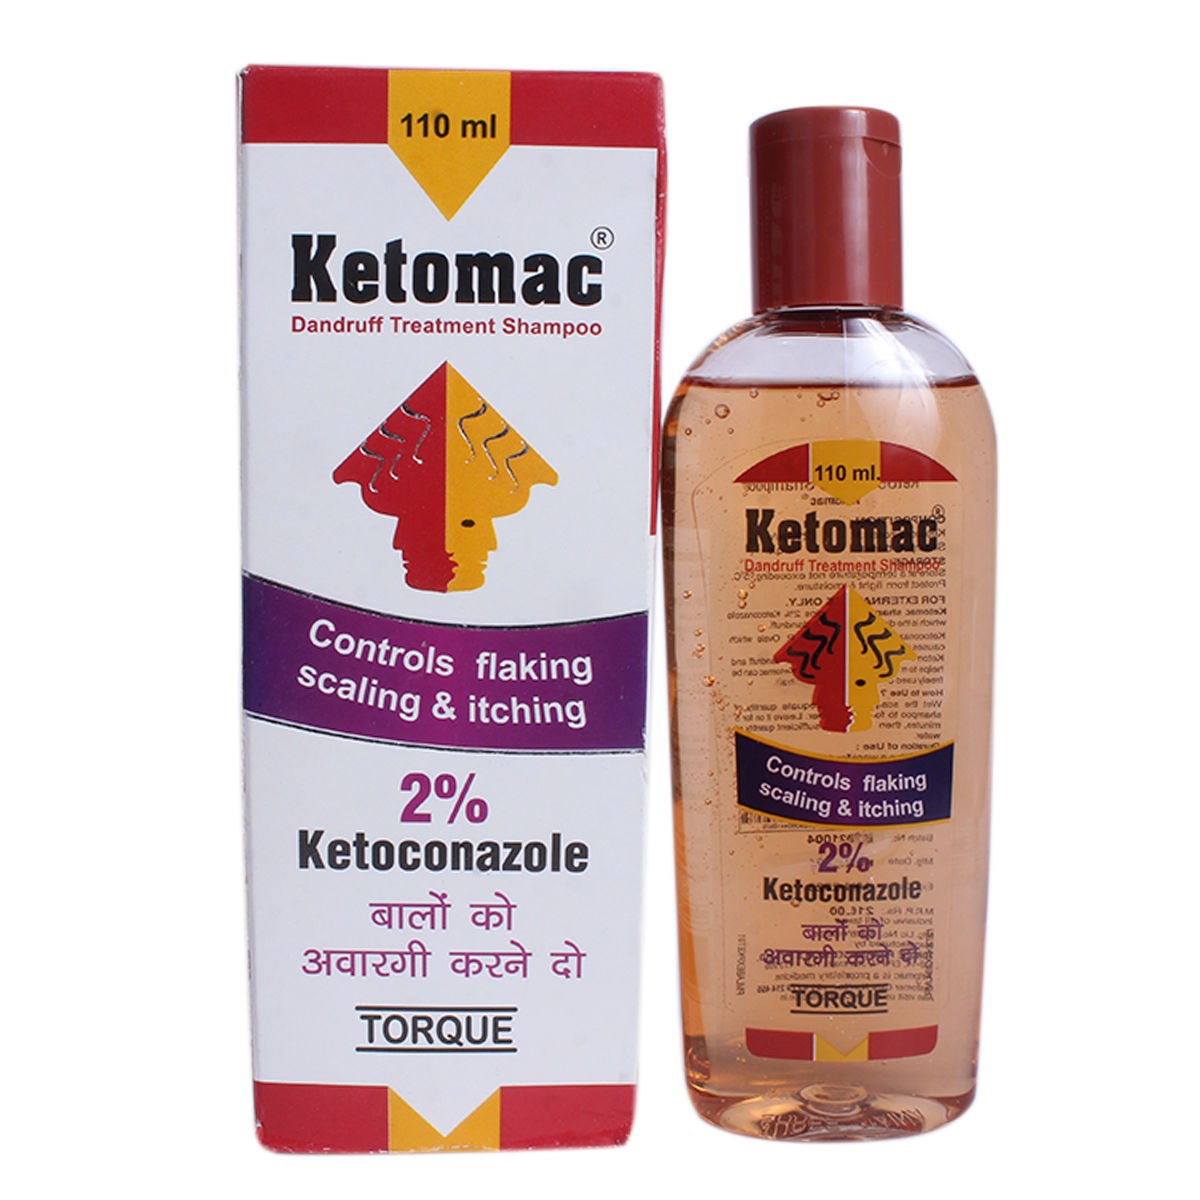 Buy Ketomac Dandruff Treatment Shampoo, 110 ml Online